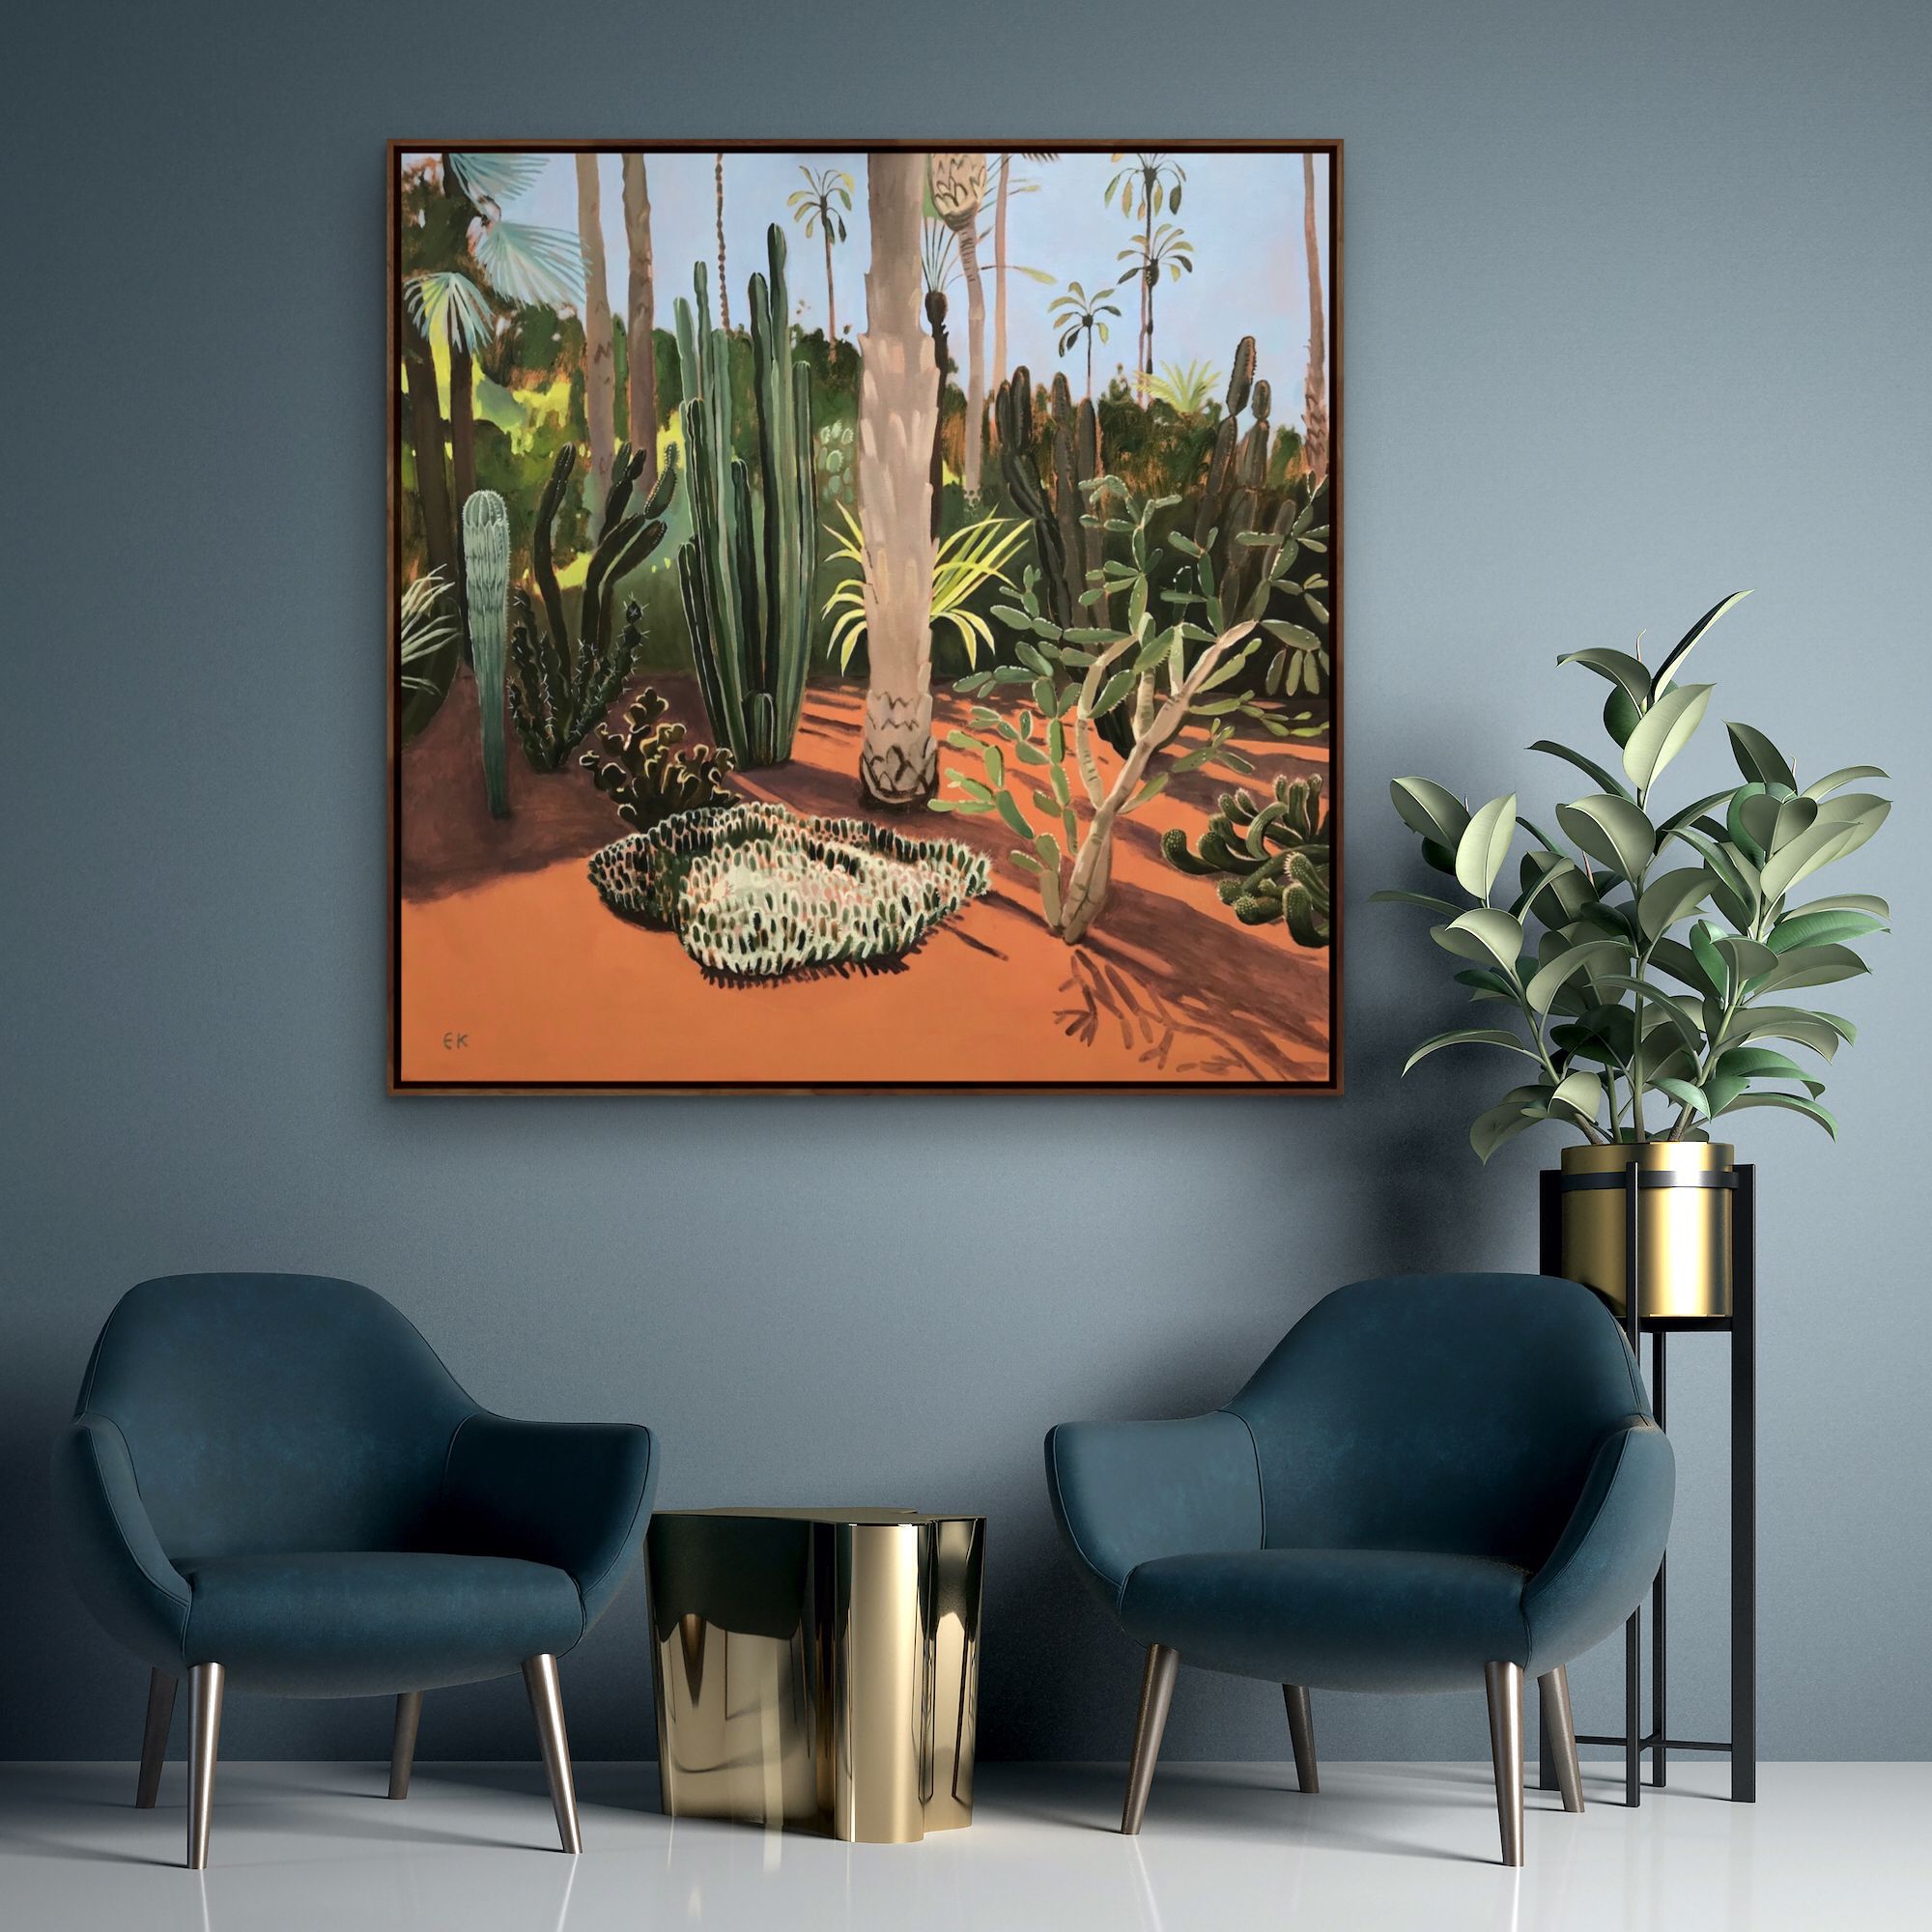 Cacti Varieties and Palm Tree, Marjorelle Gardens, Morocco by Elaine Kazimierczuk - Secondary Image